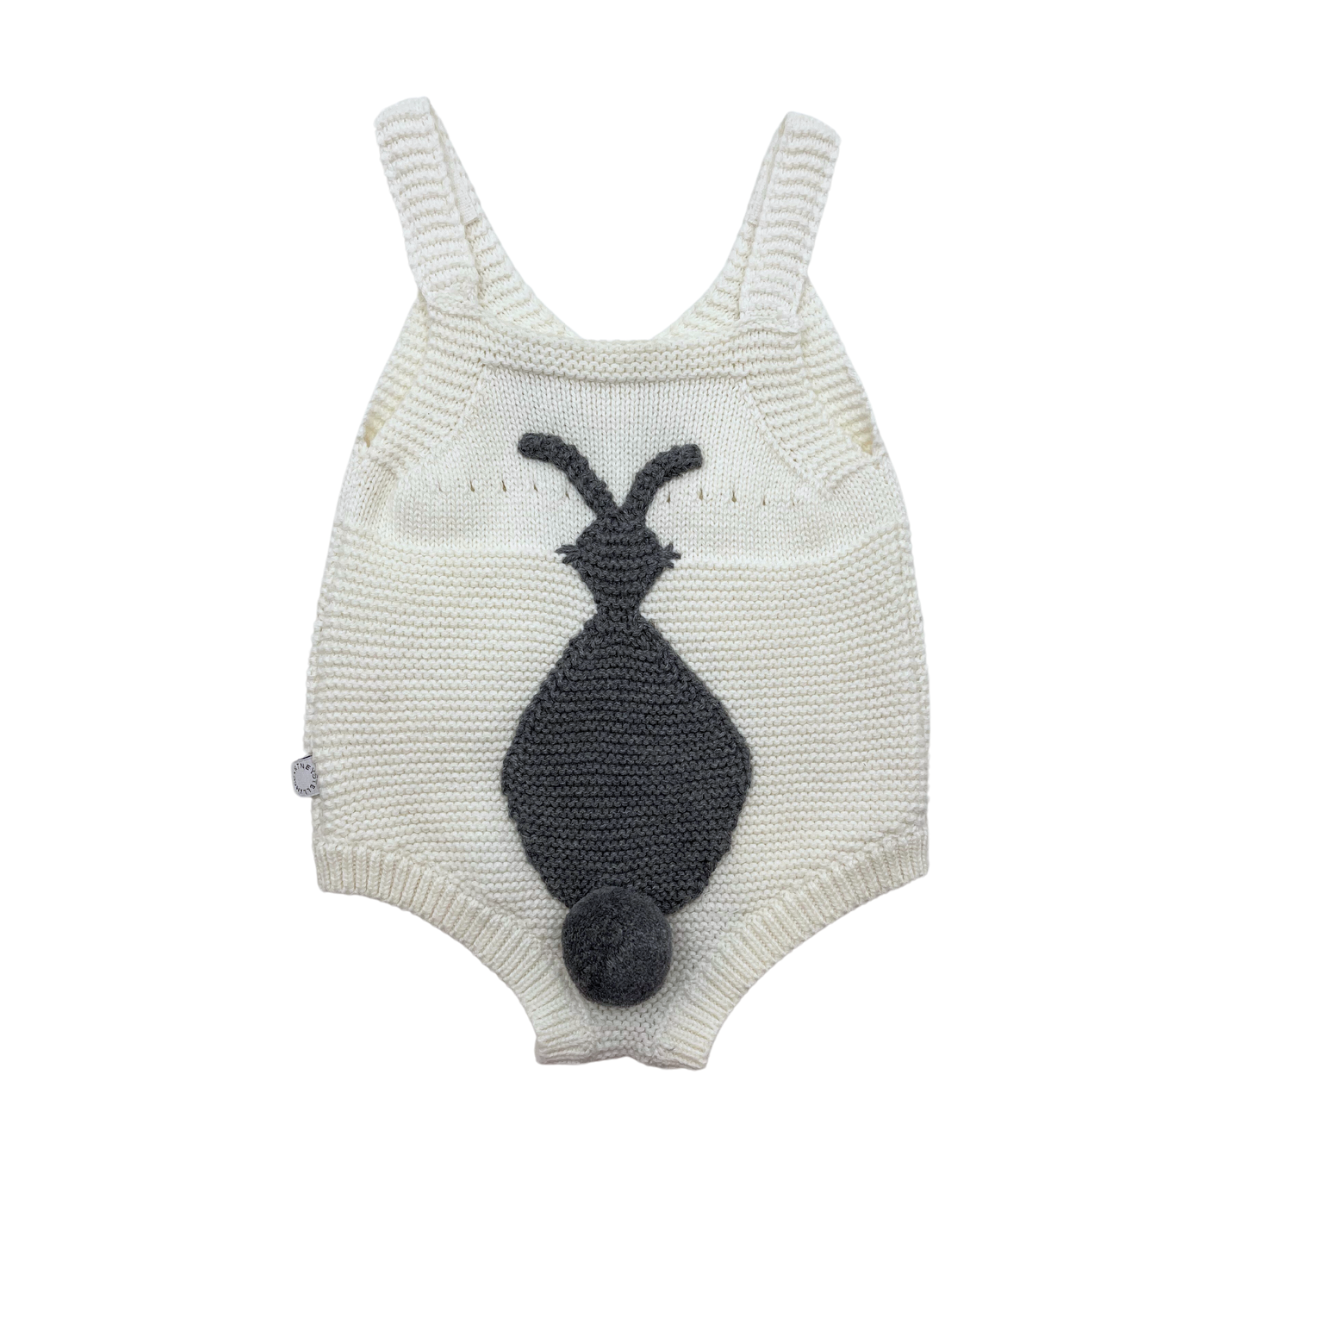 STELLA MCCARTNEY - Gray rabbit knit bodysuit - 3 months